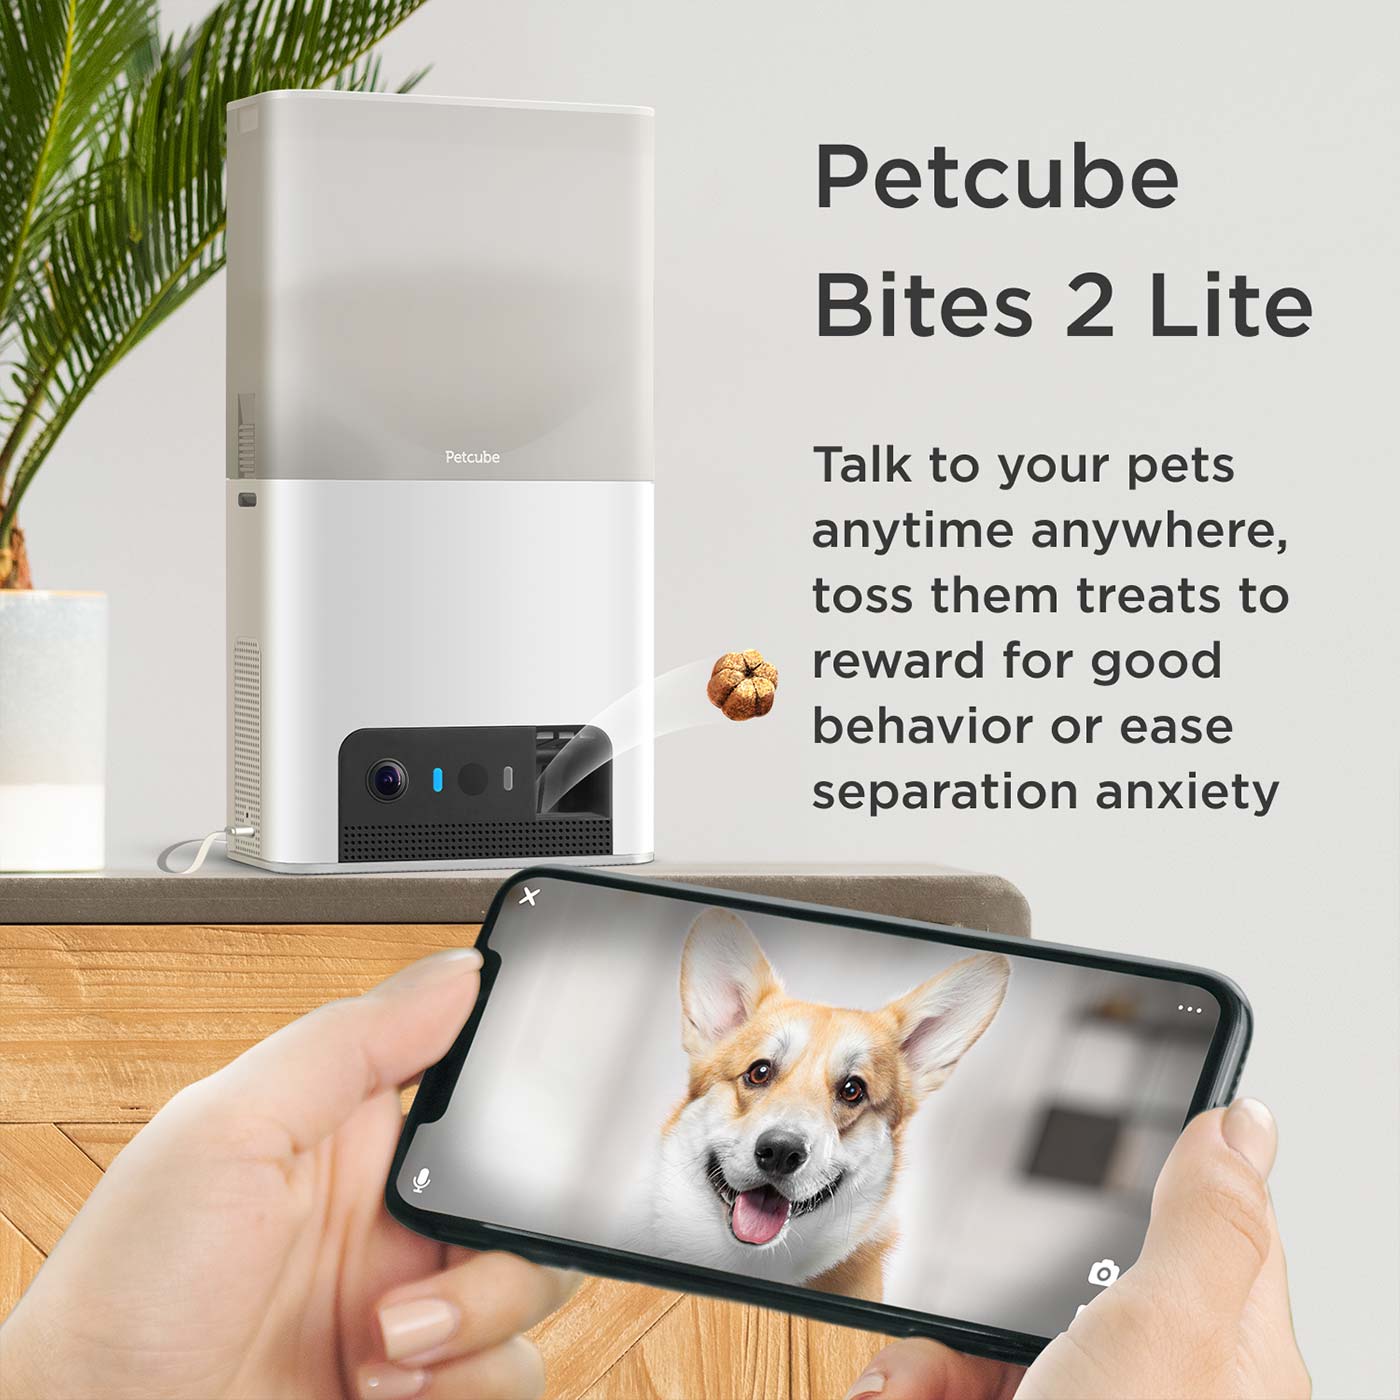 Petcube Bites 2 Lite Interactive Pet Camera With Treat Dispenser